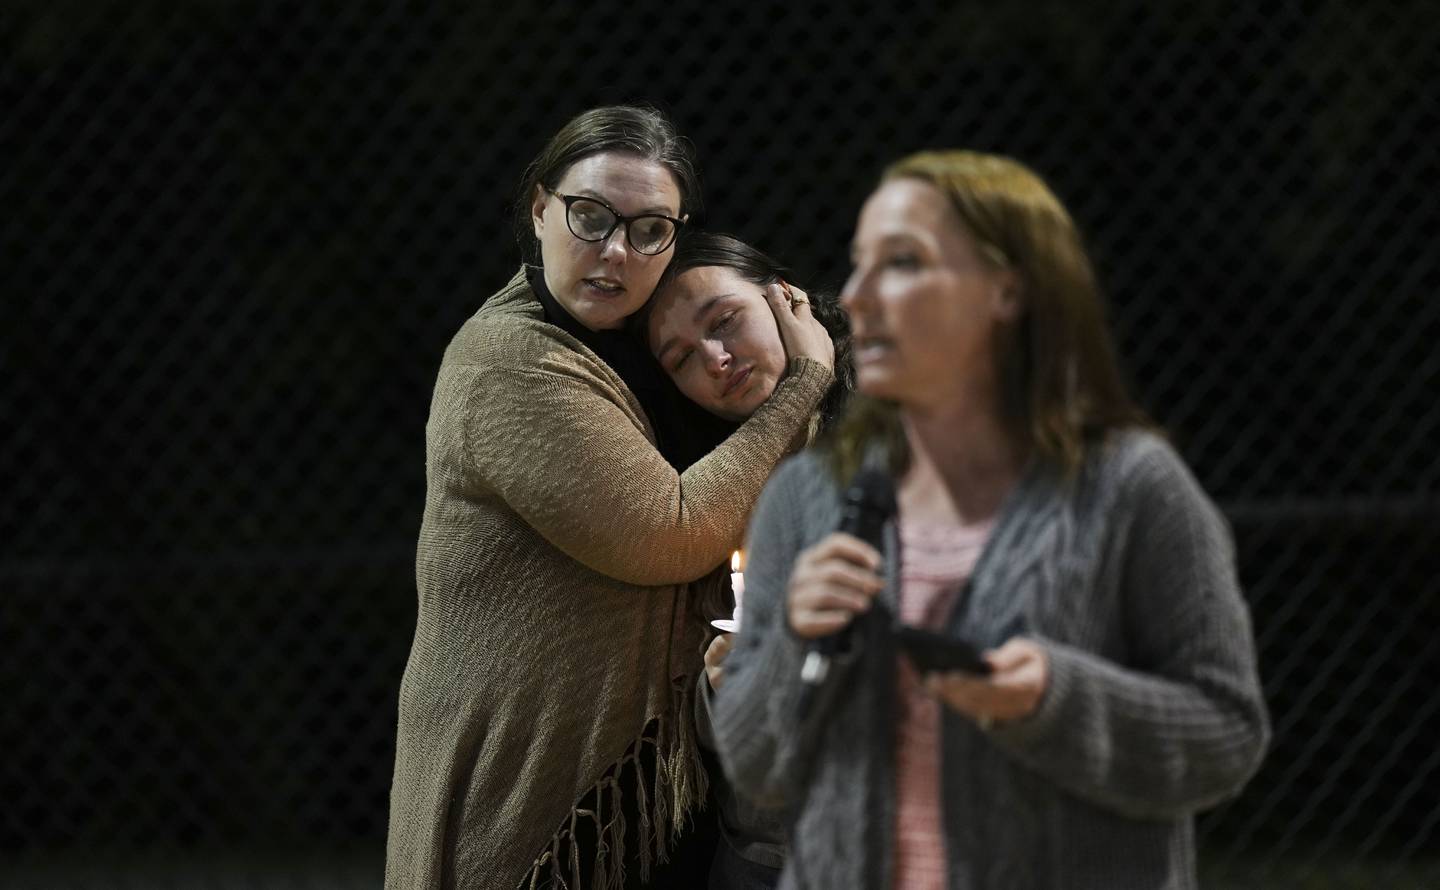 Kristin Karopchinsky holds a loved one while Tracy Karopchinsky speaks at the vigil